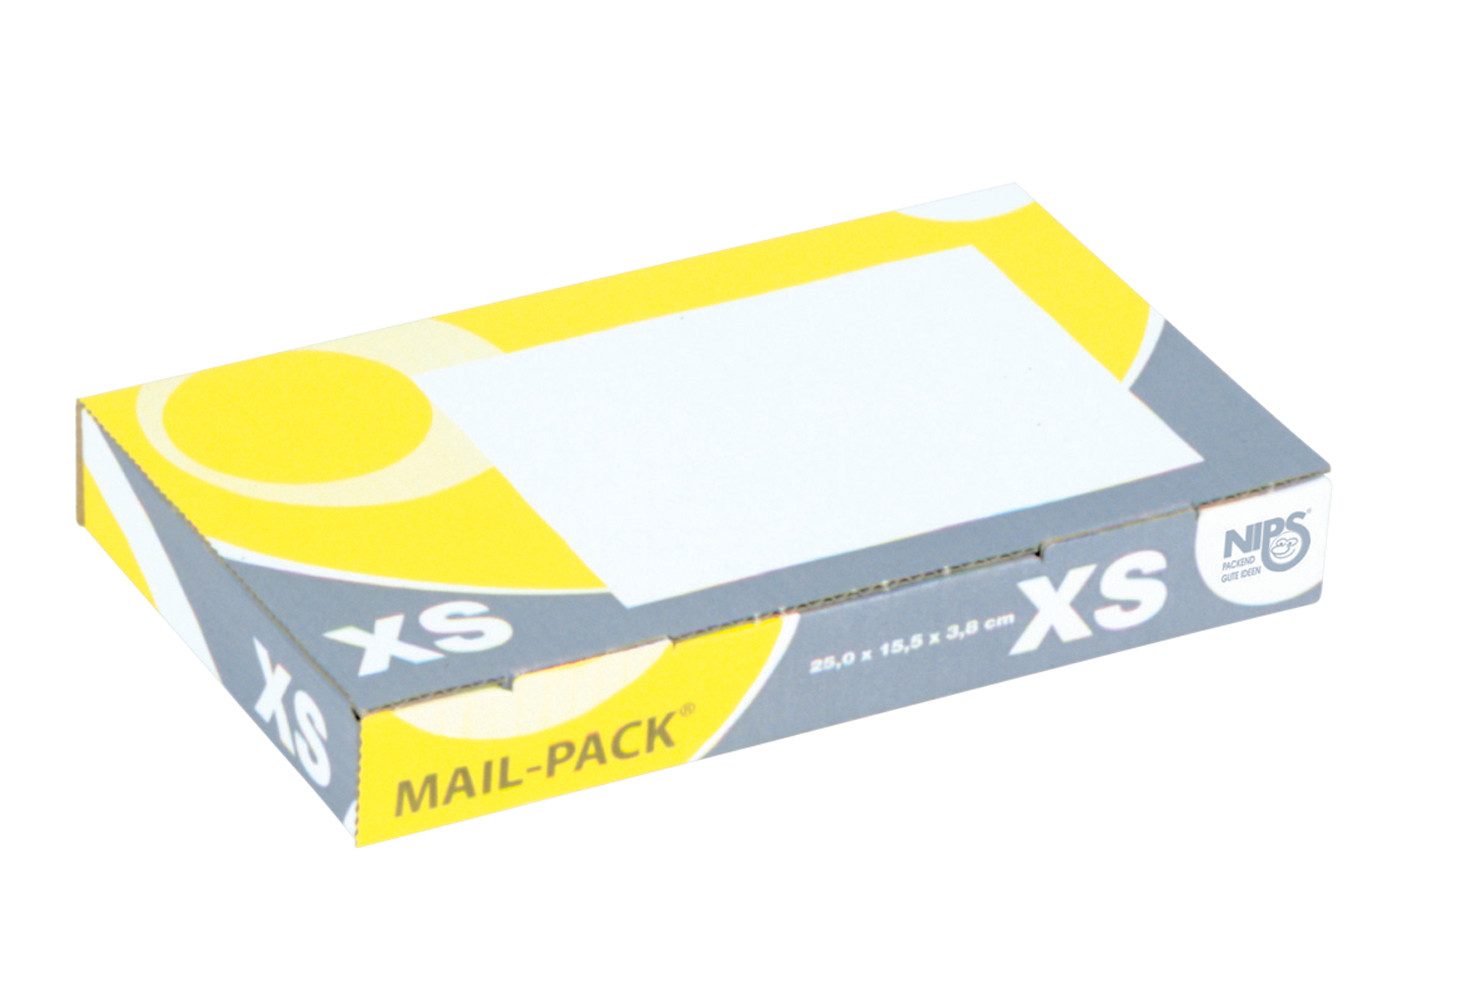 NIPS Versandkarton MAIL-PACK Post-Versandkarton (20 Stück), verschiedene Größen, Verpackungskarton, Wellpappe, mehrfarbig bedruckt